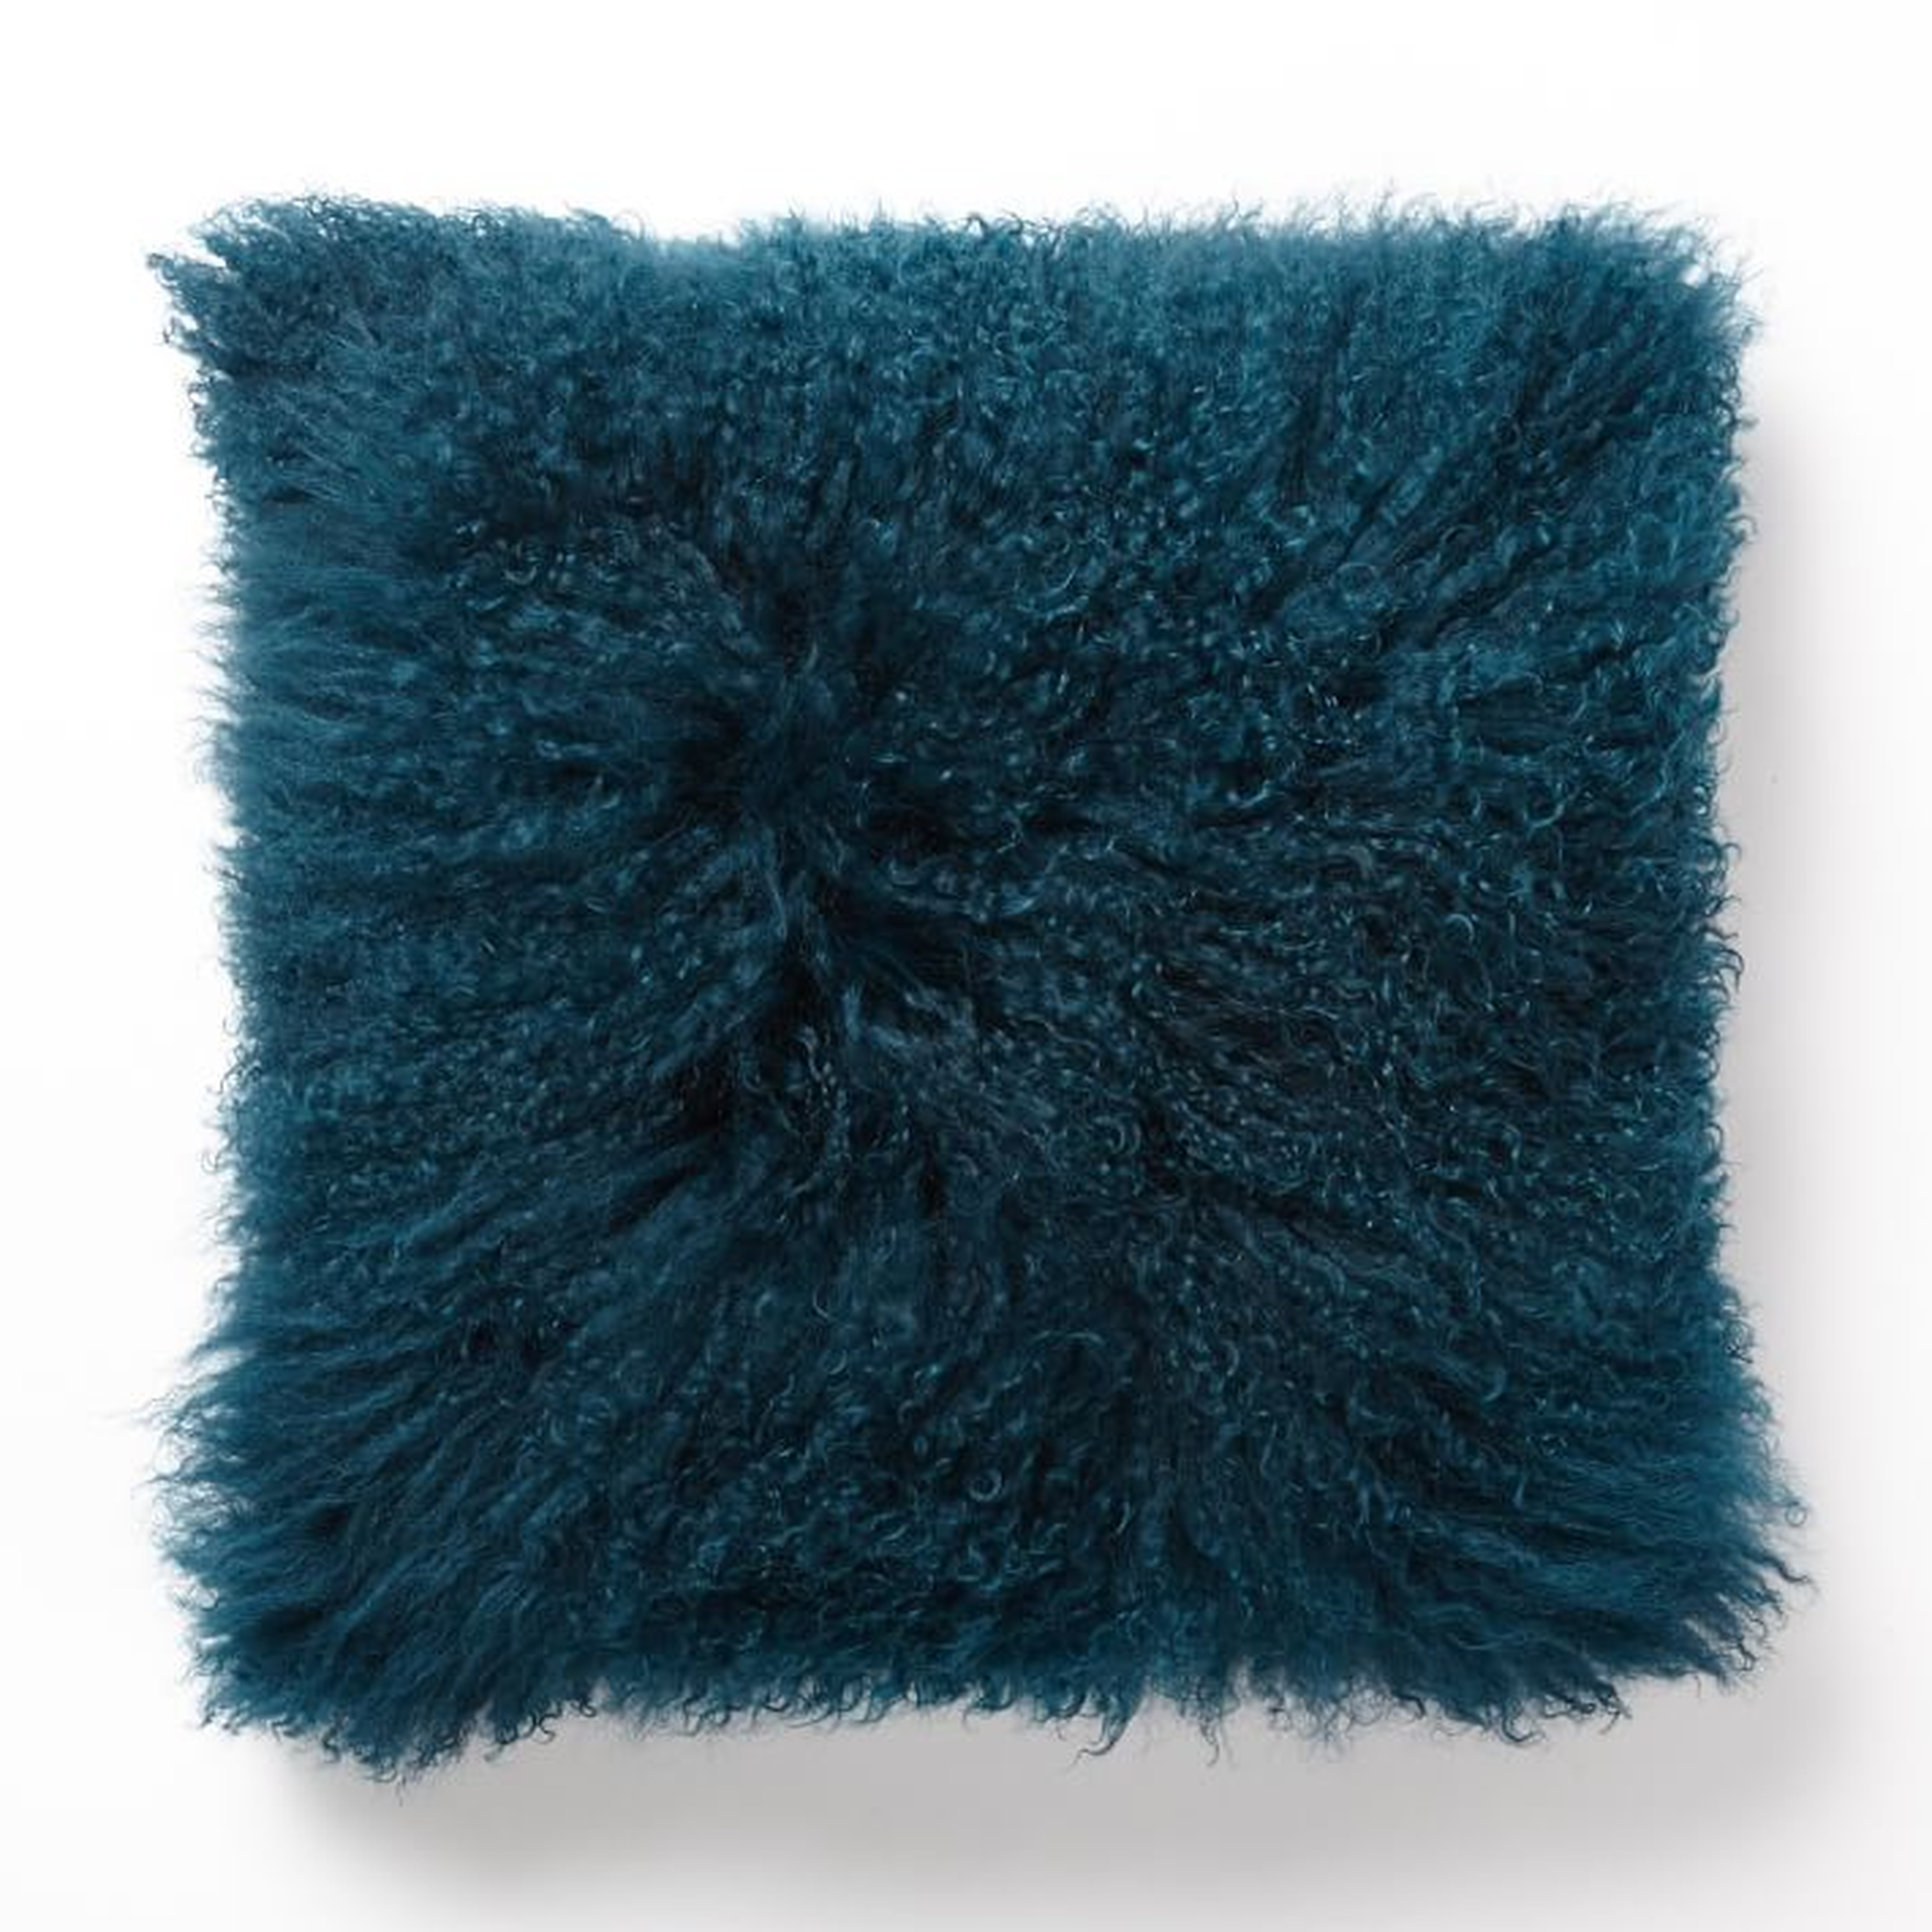 Mongolian Lamb Pillow Cover, 16"x16", Teal Blue - West Elm